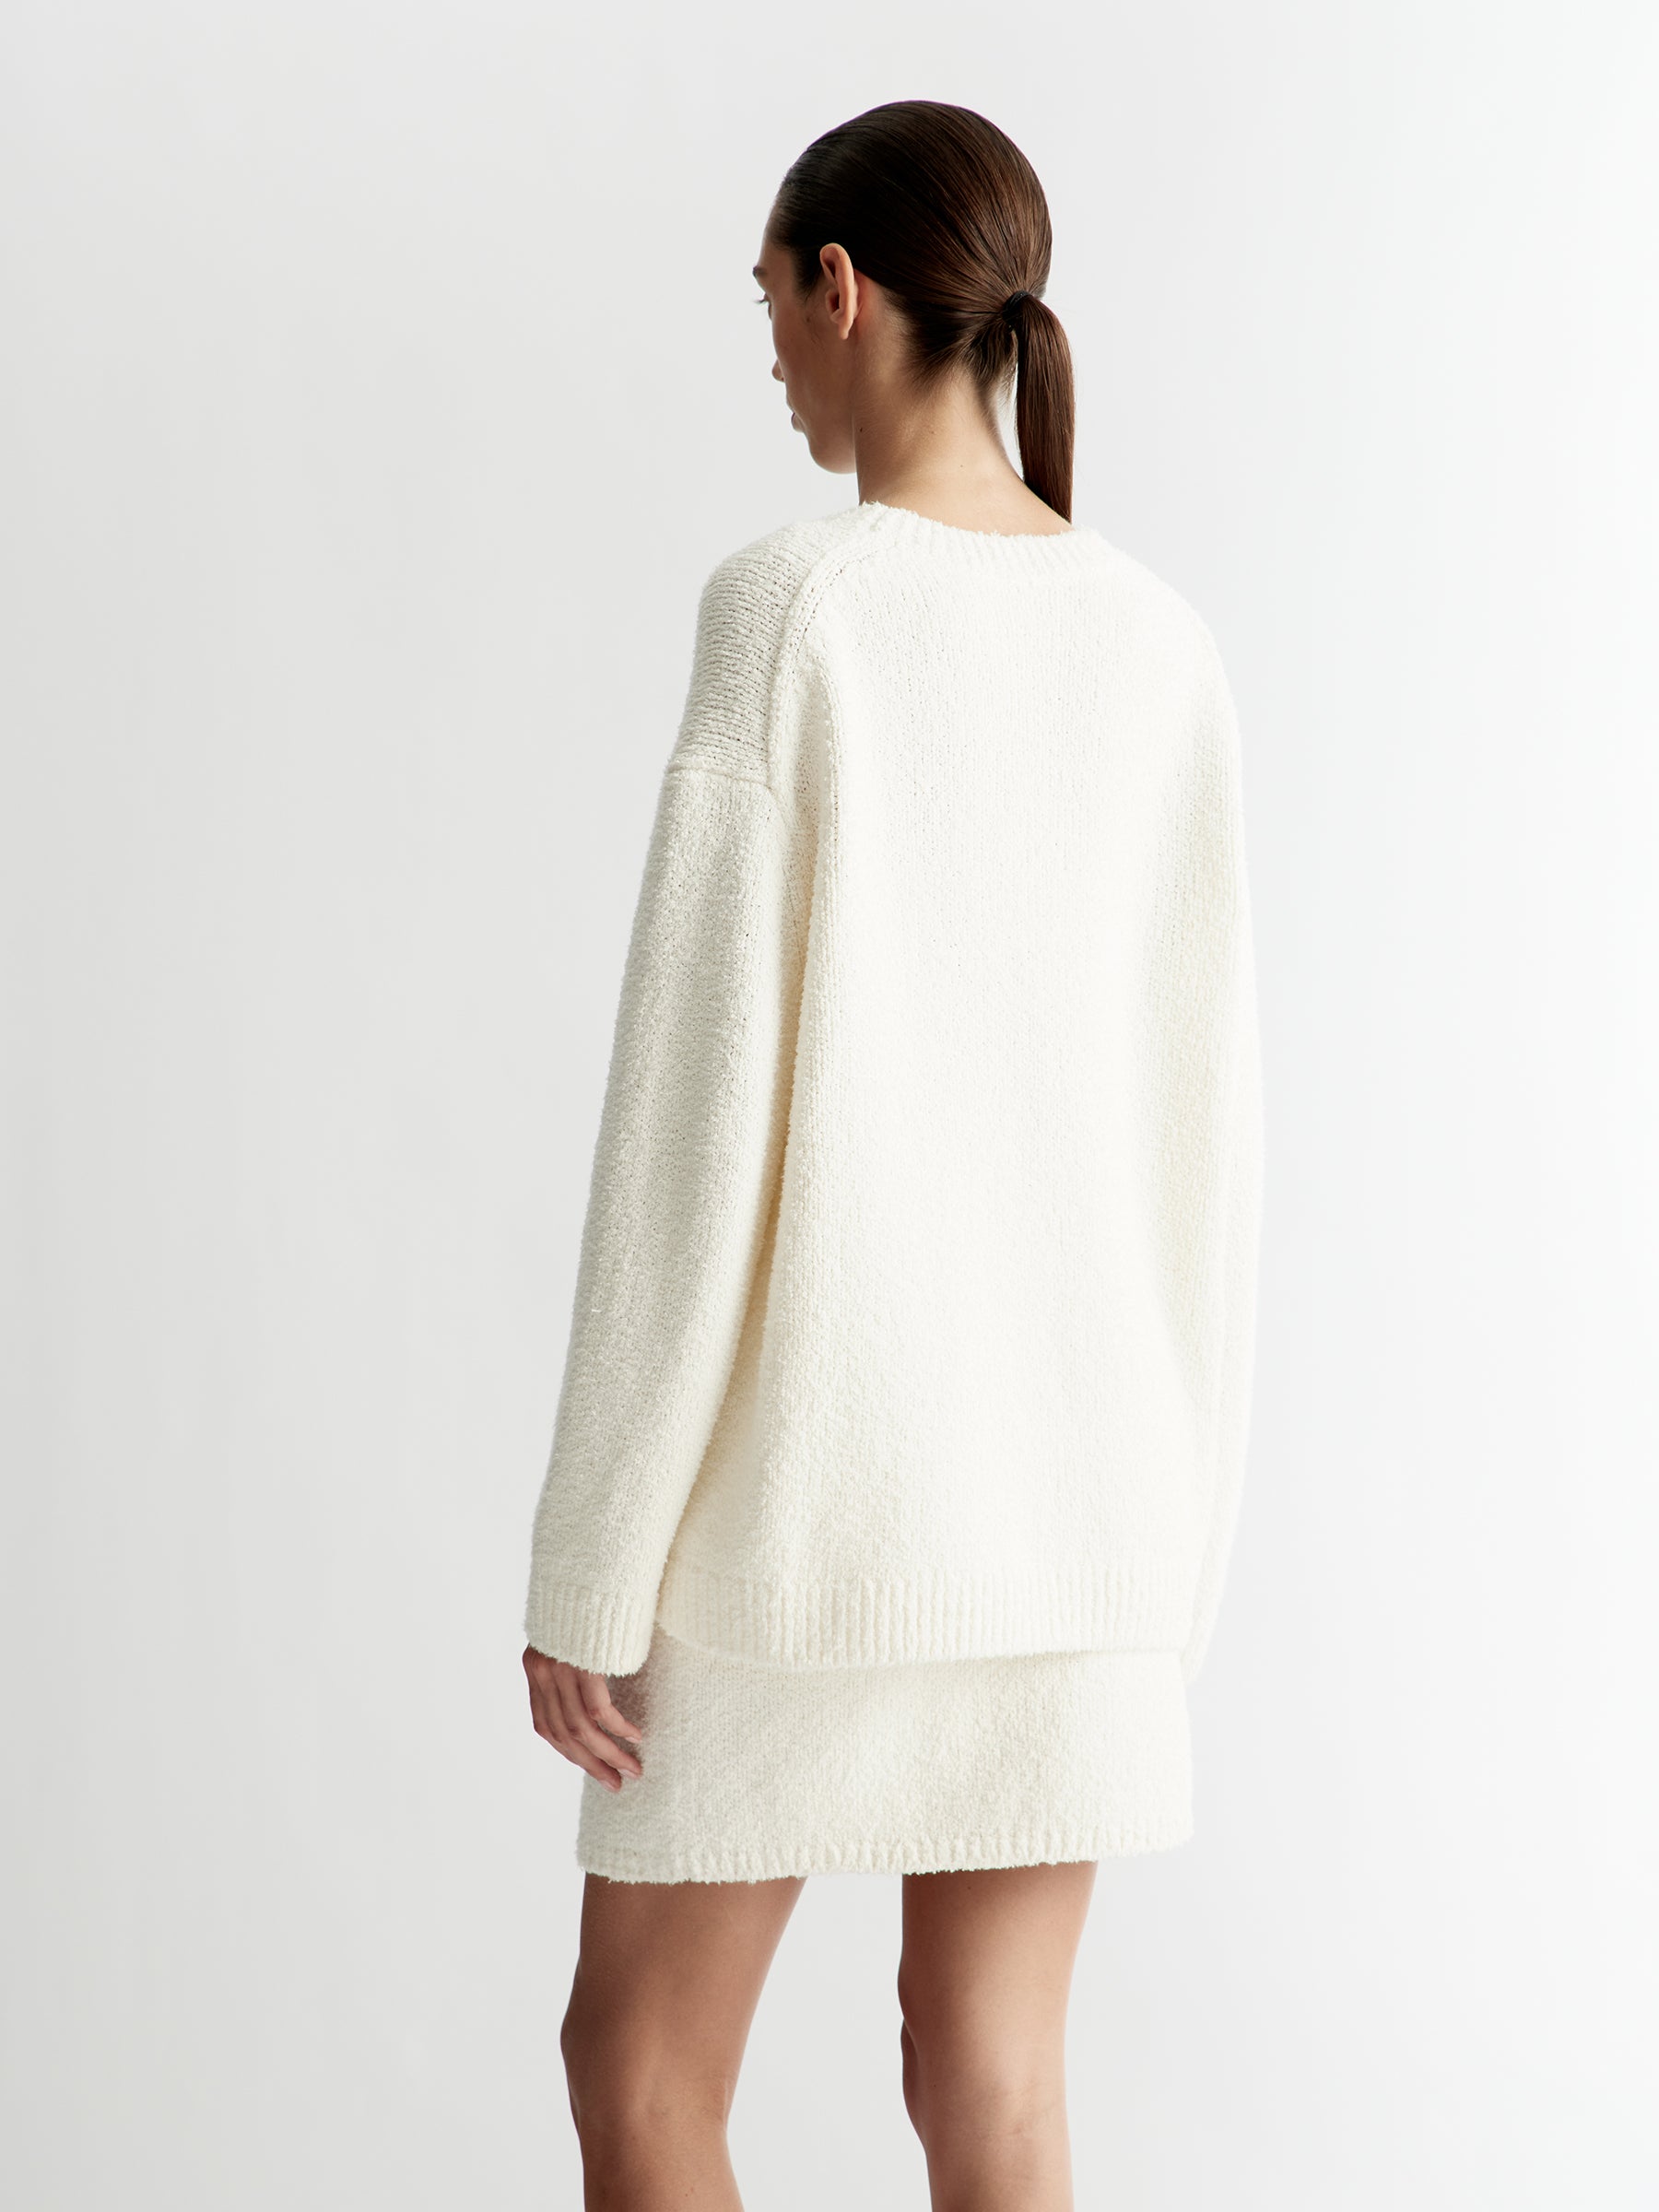 Bouclé knit skirt